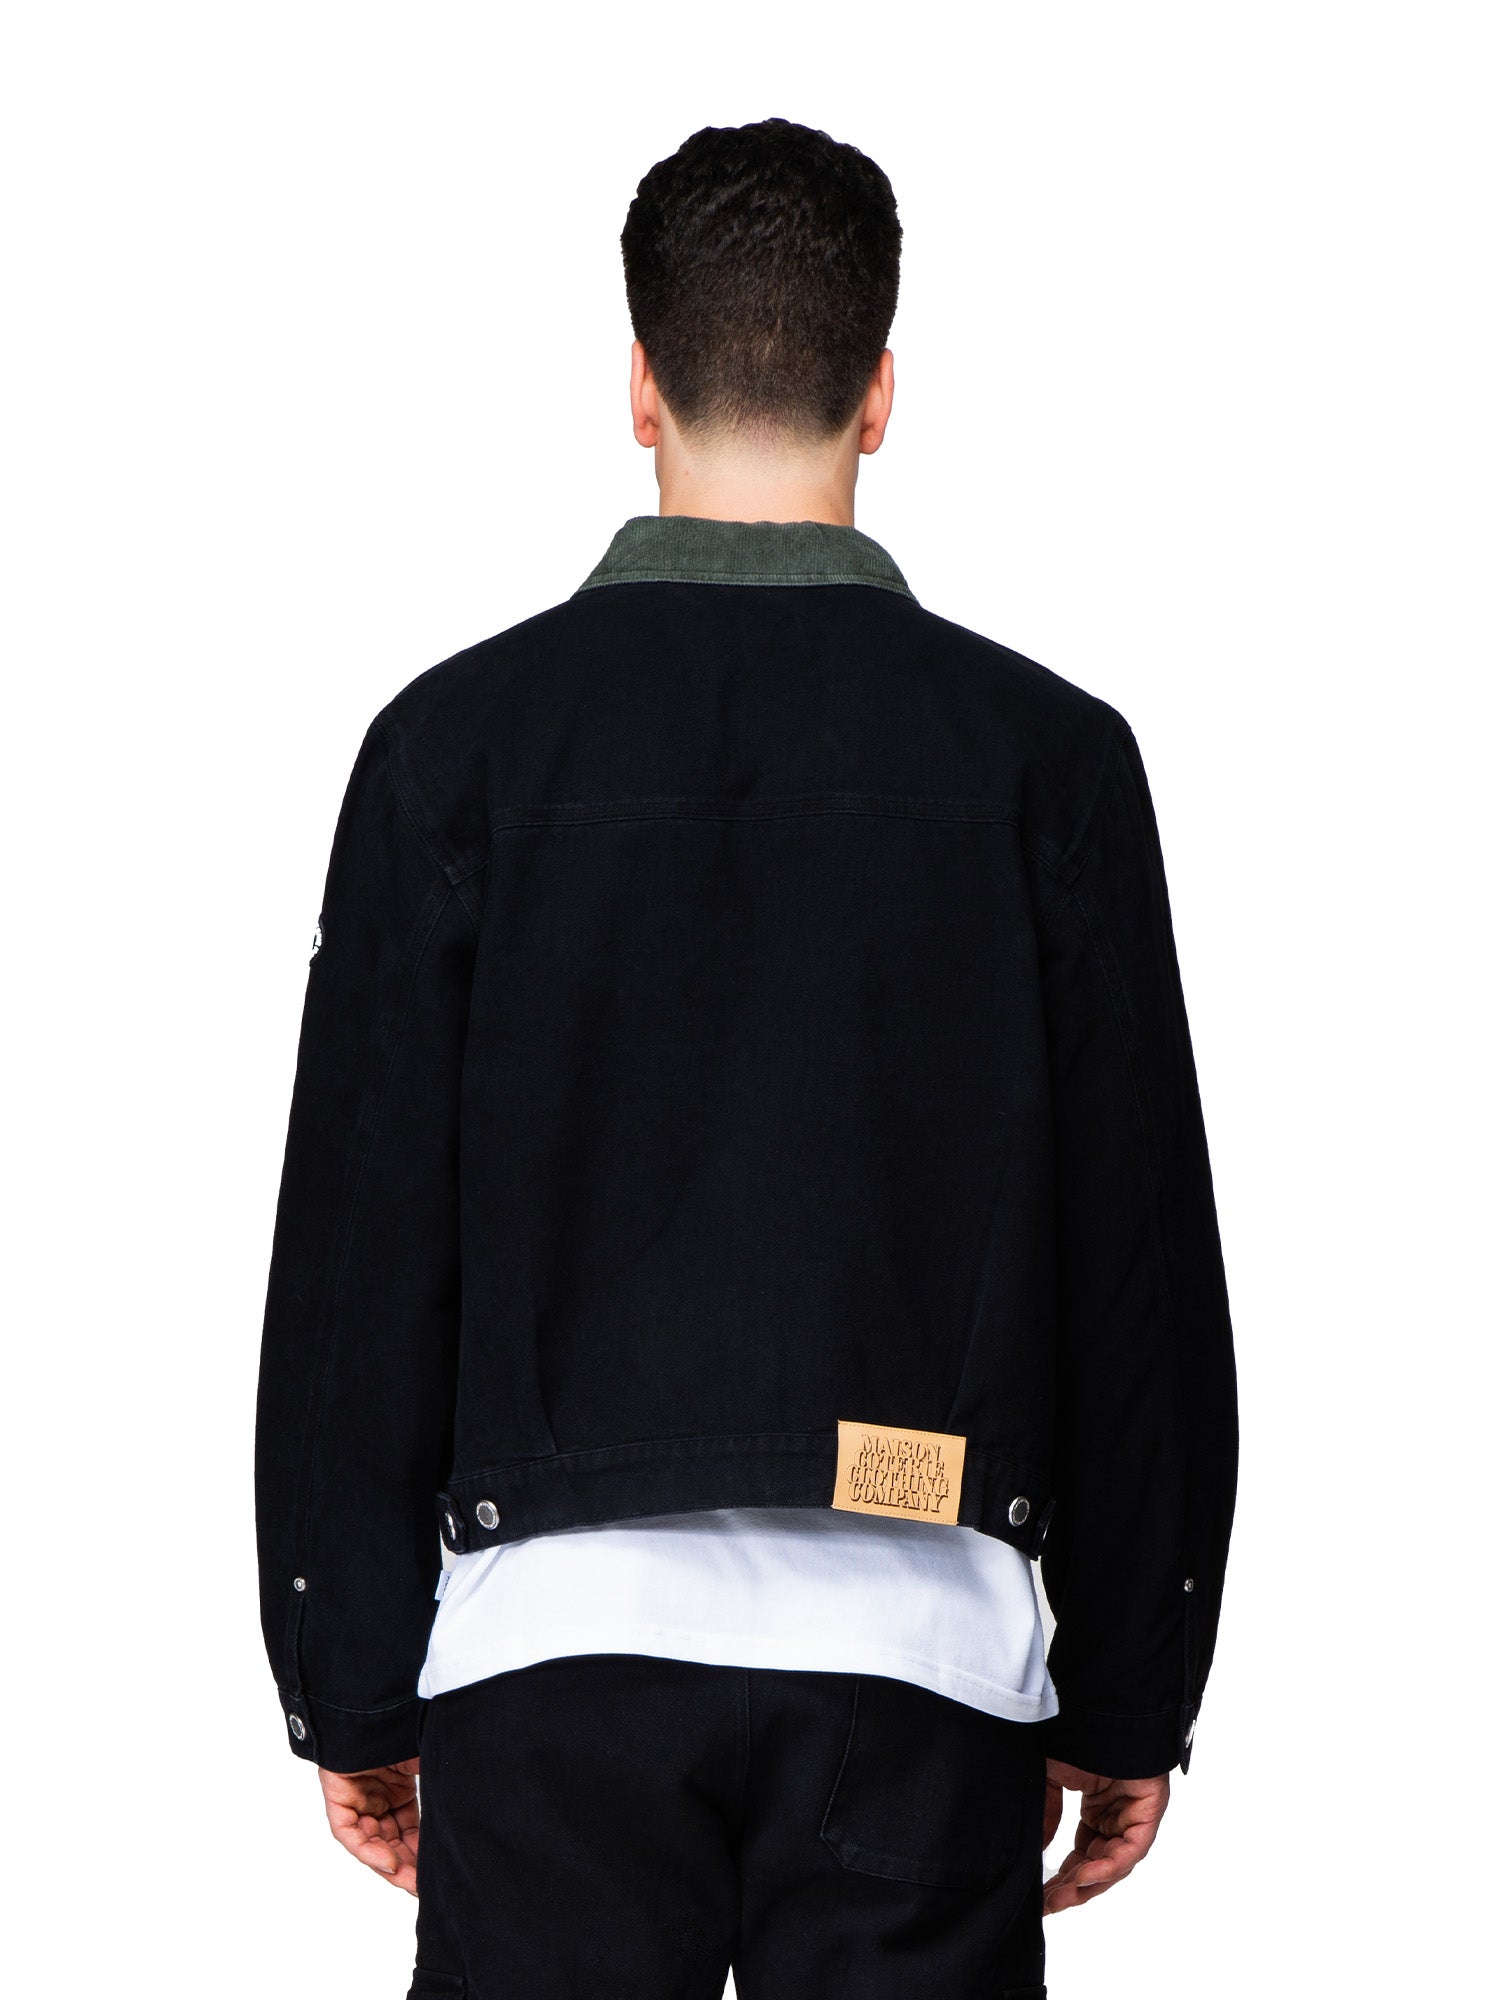 Kaiden - Cotton Canvas Jacket - Black